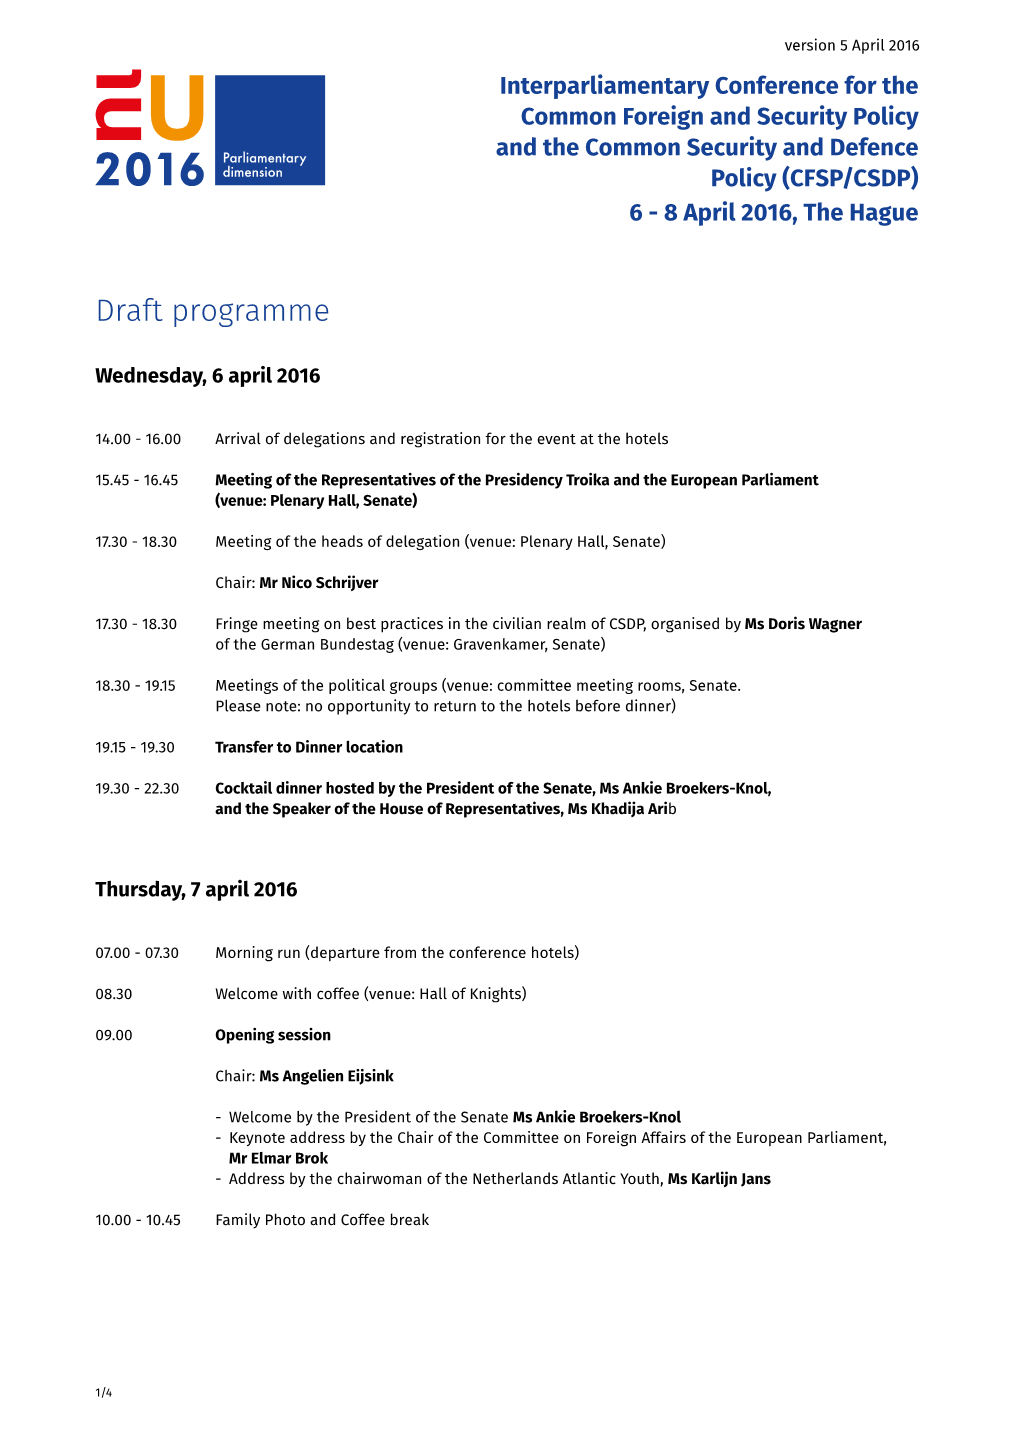 Draft Programme